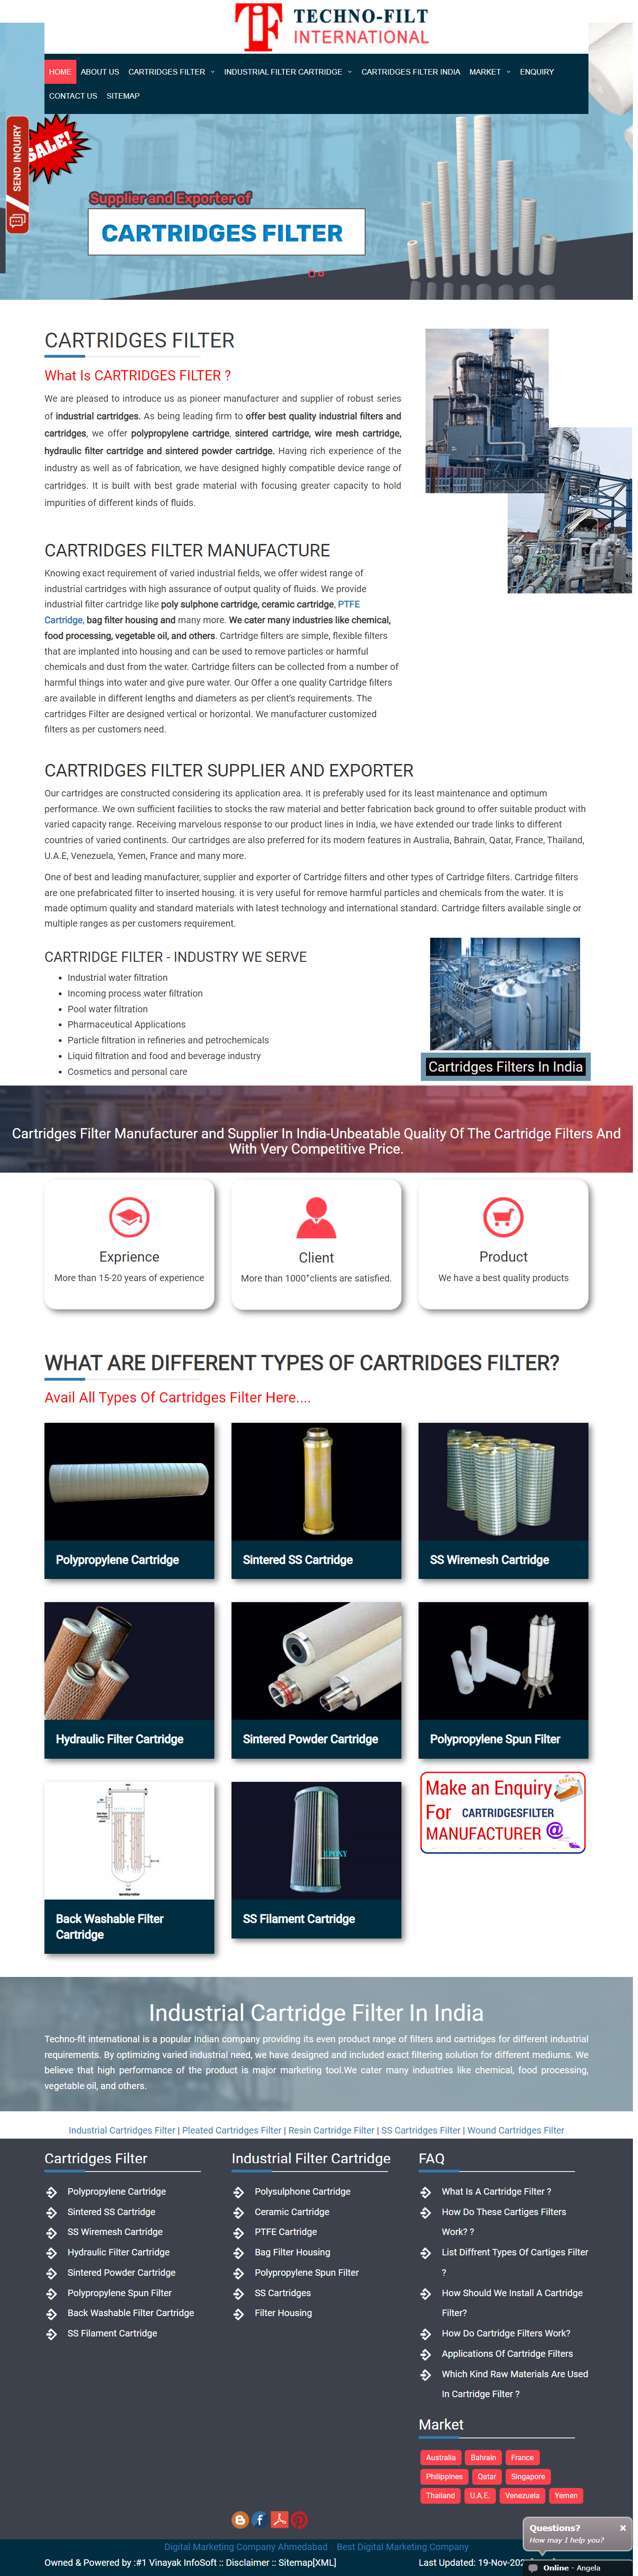 cartridges Filter